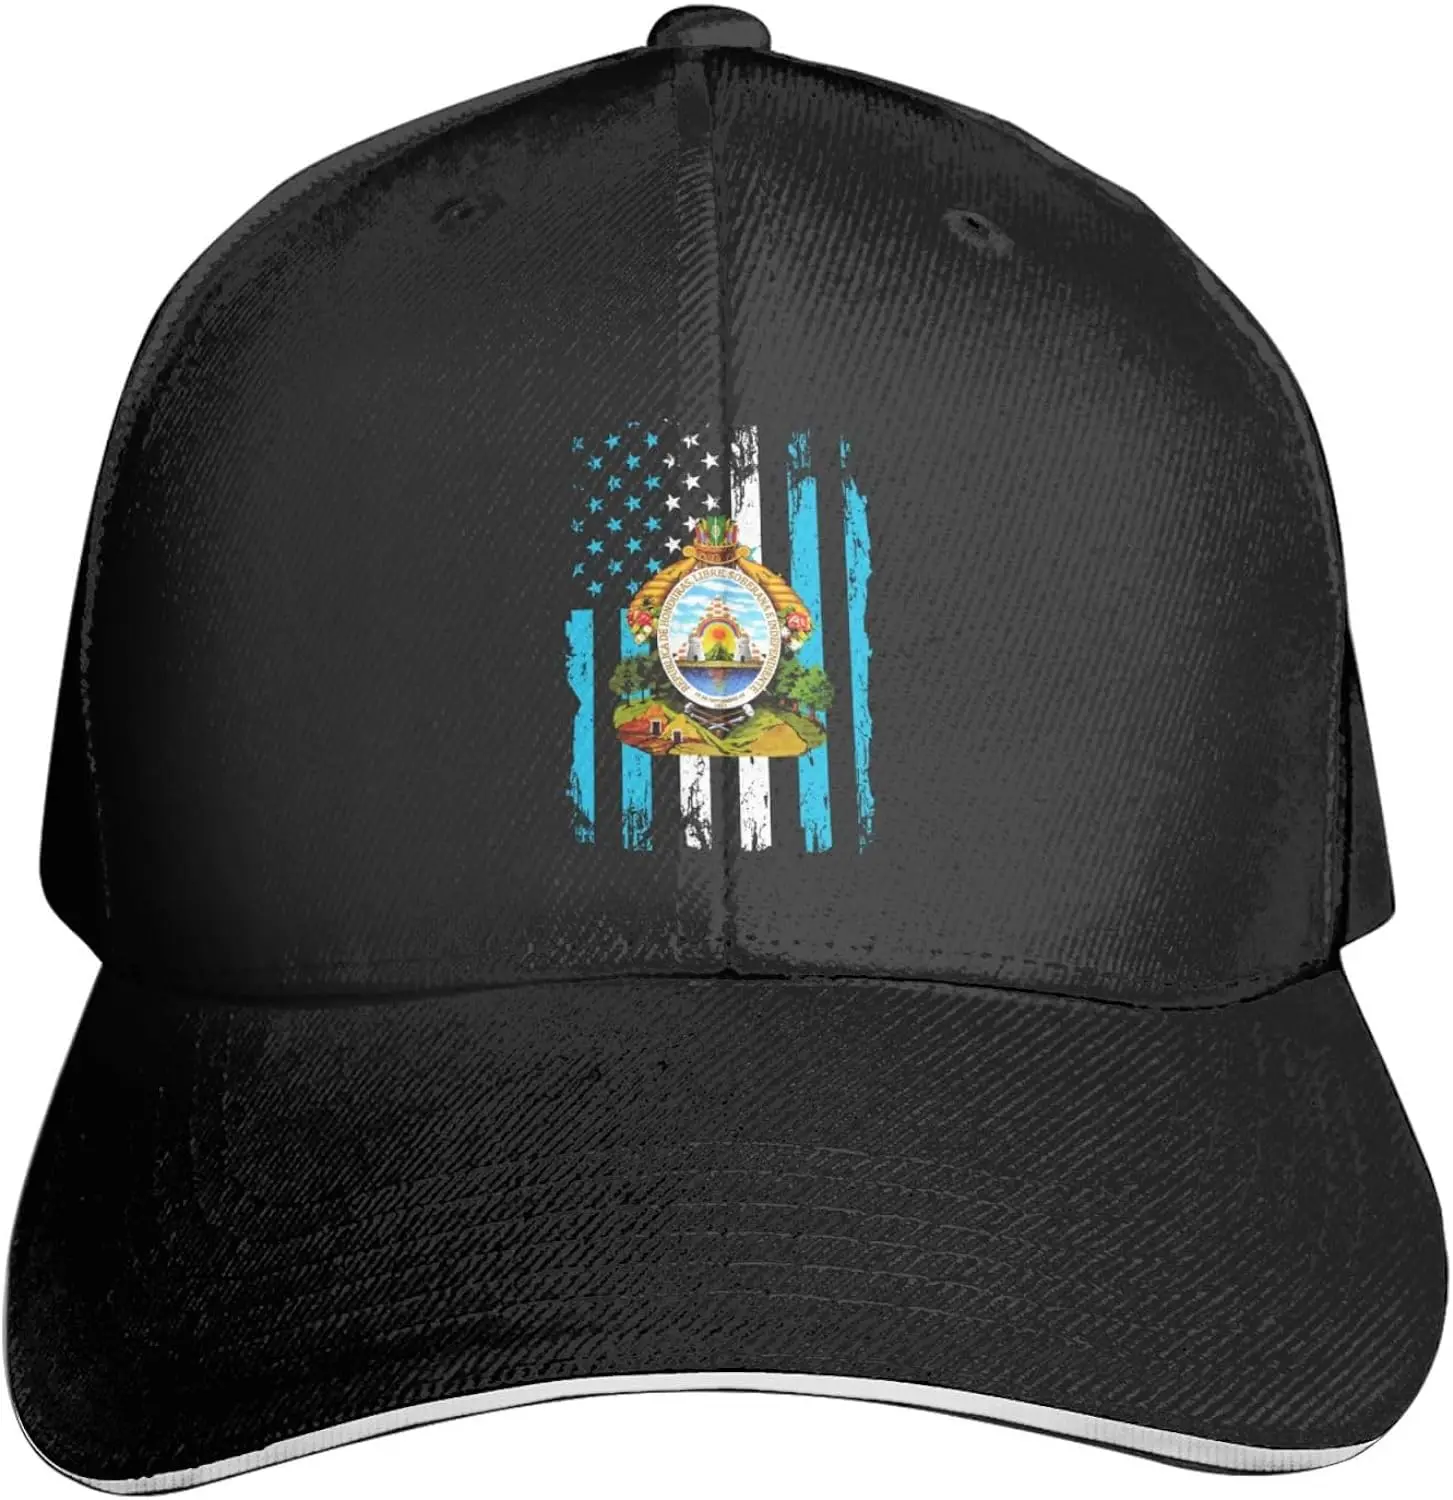 G premium adjustable baseball cap for men and women outdoor sports sun protection black thumb200